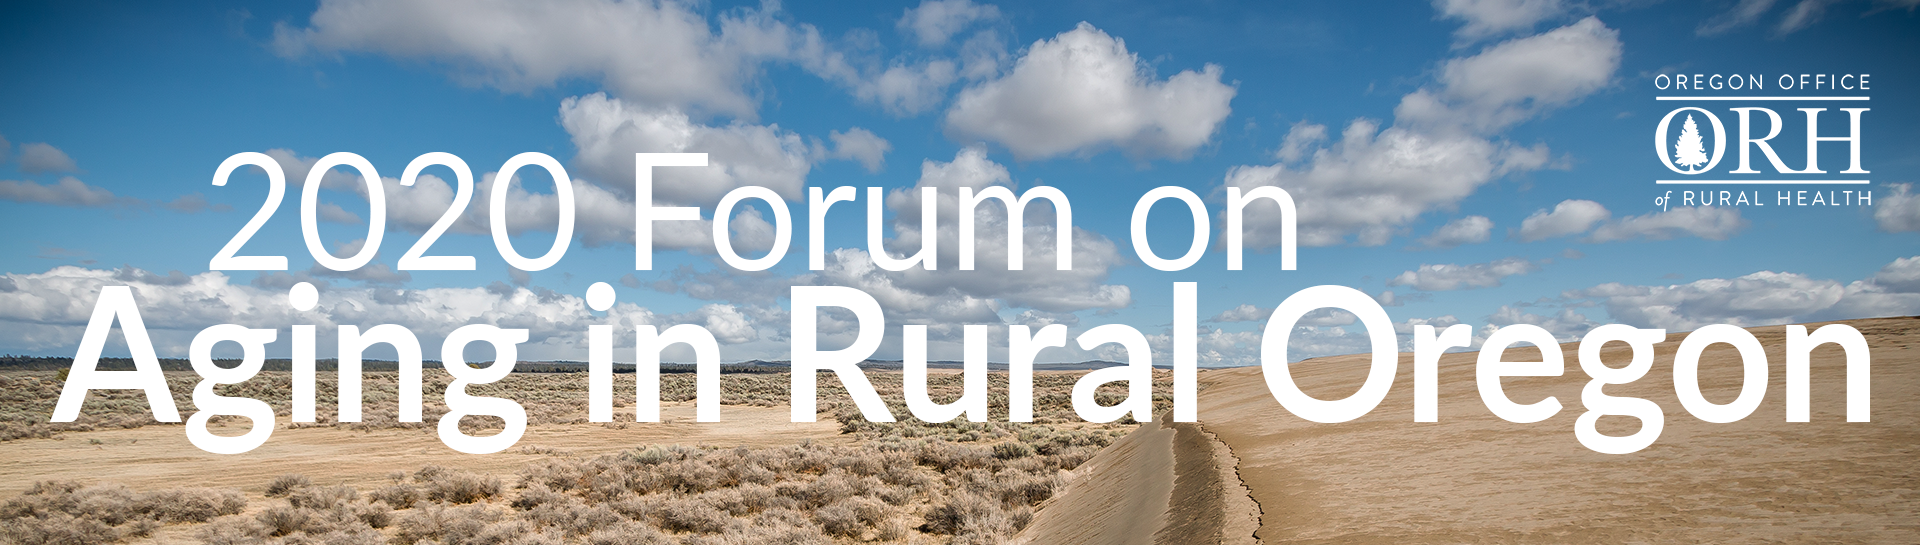 2020 Forum on Aging in Rural Oregon